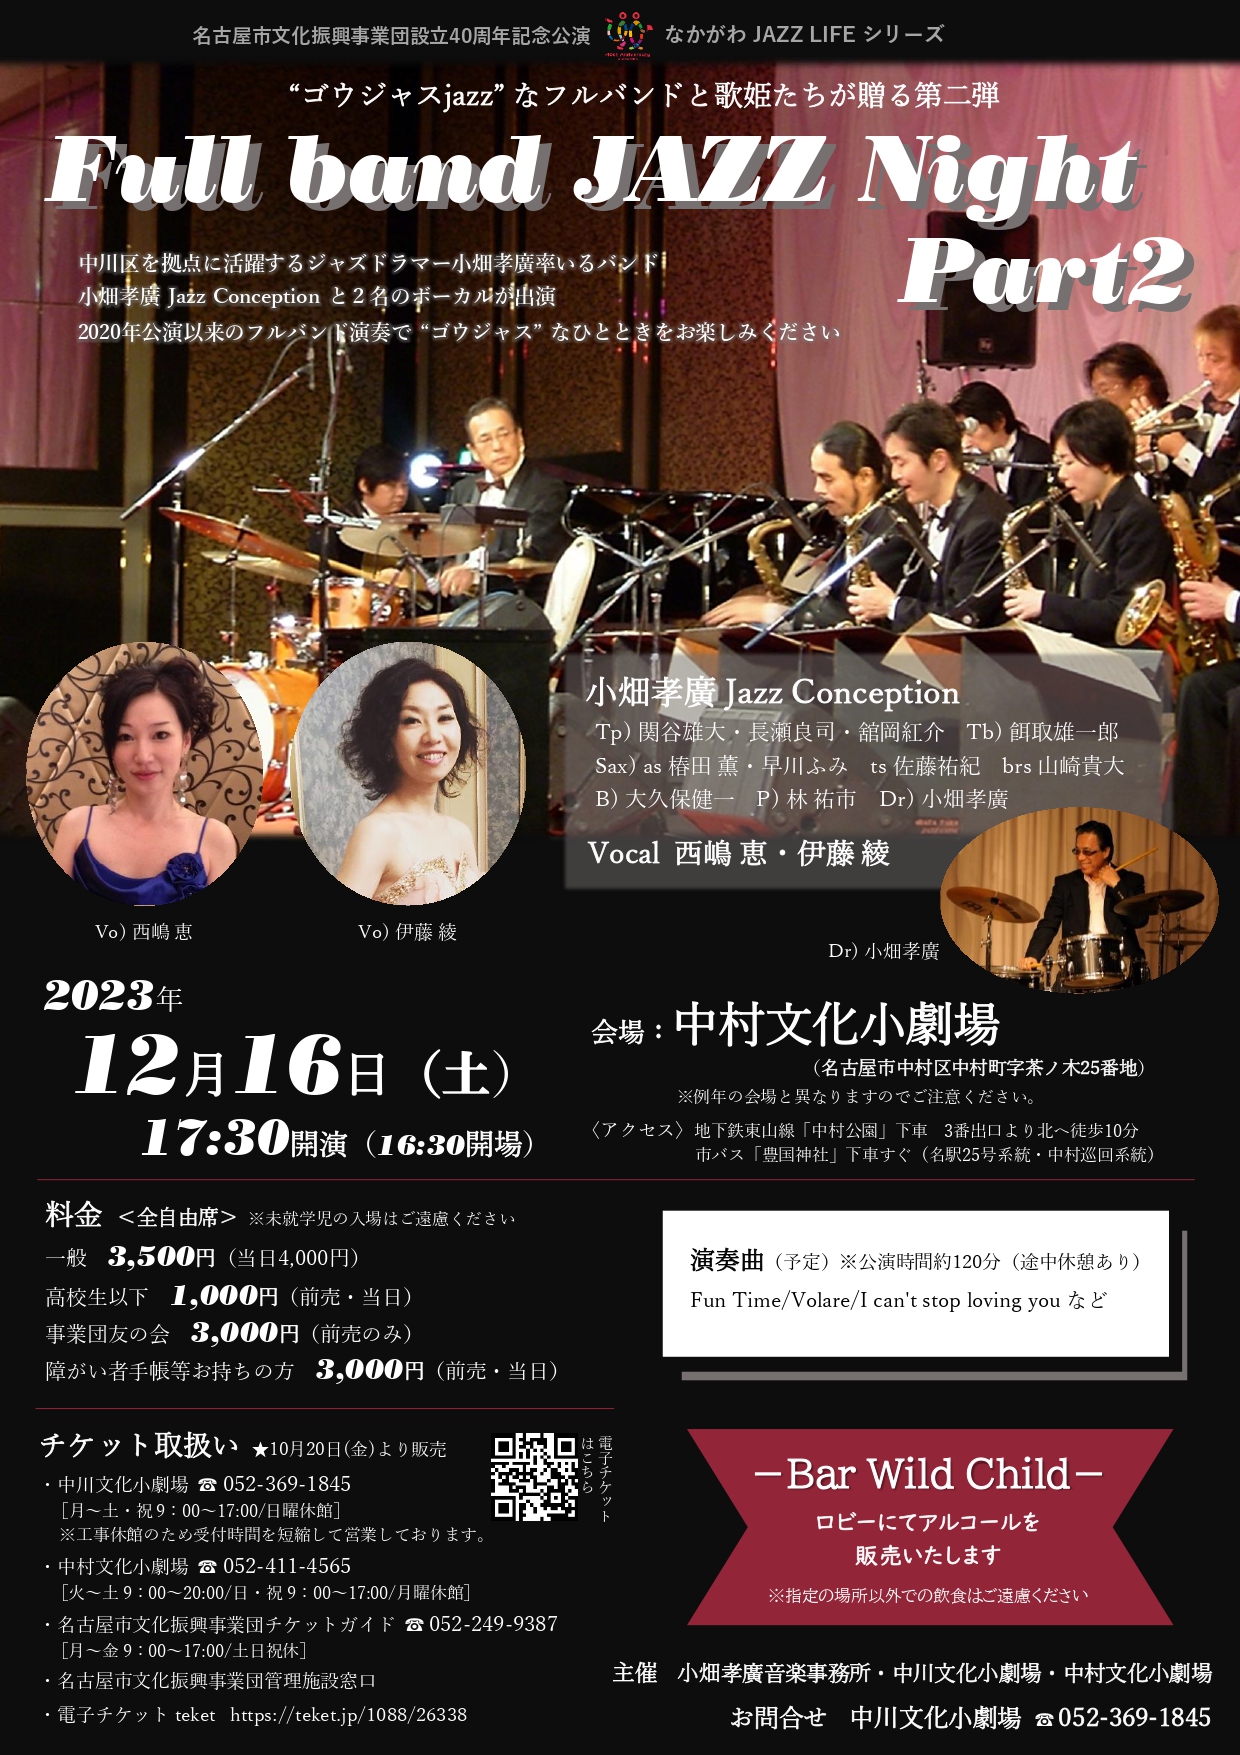 Full Band Jazz Night Part 2 【なかがわ JAZZ LIFE シリーズ】のチラシ